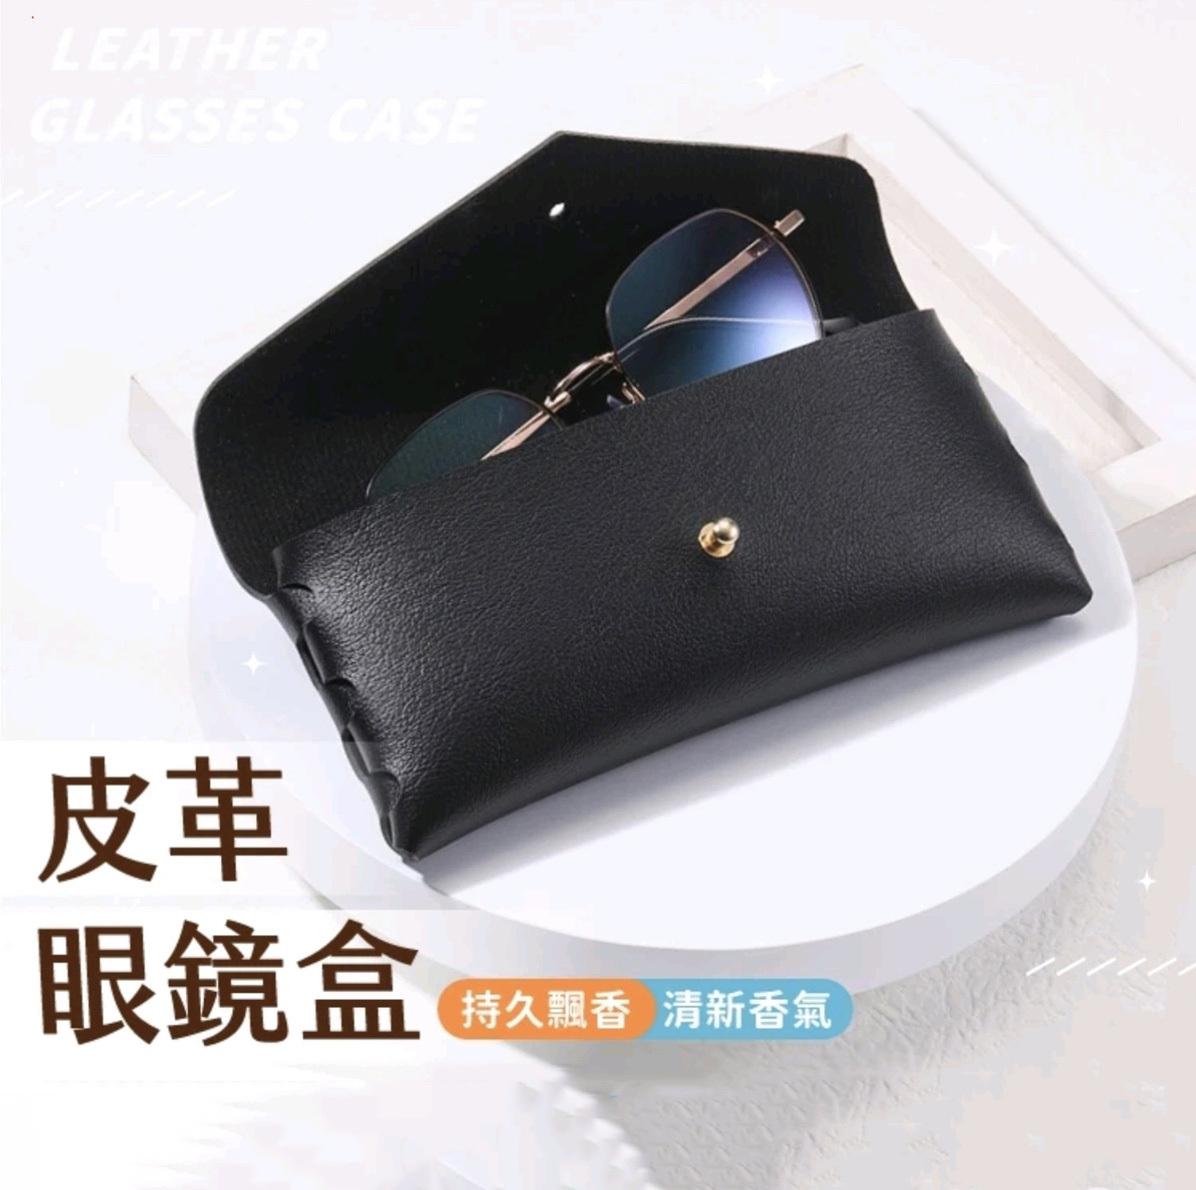 Leather glasses case, glasses storage, glasses bag, glasses case, sunglasses storage, accessories